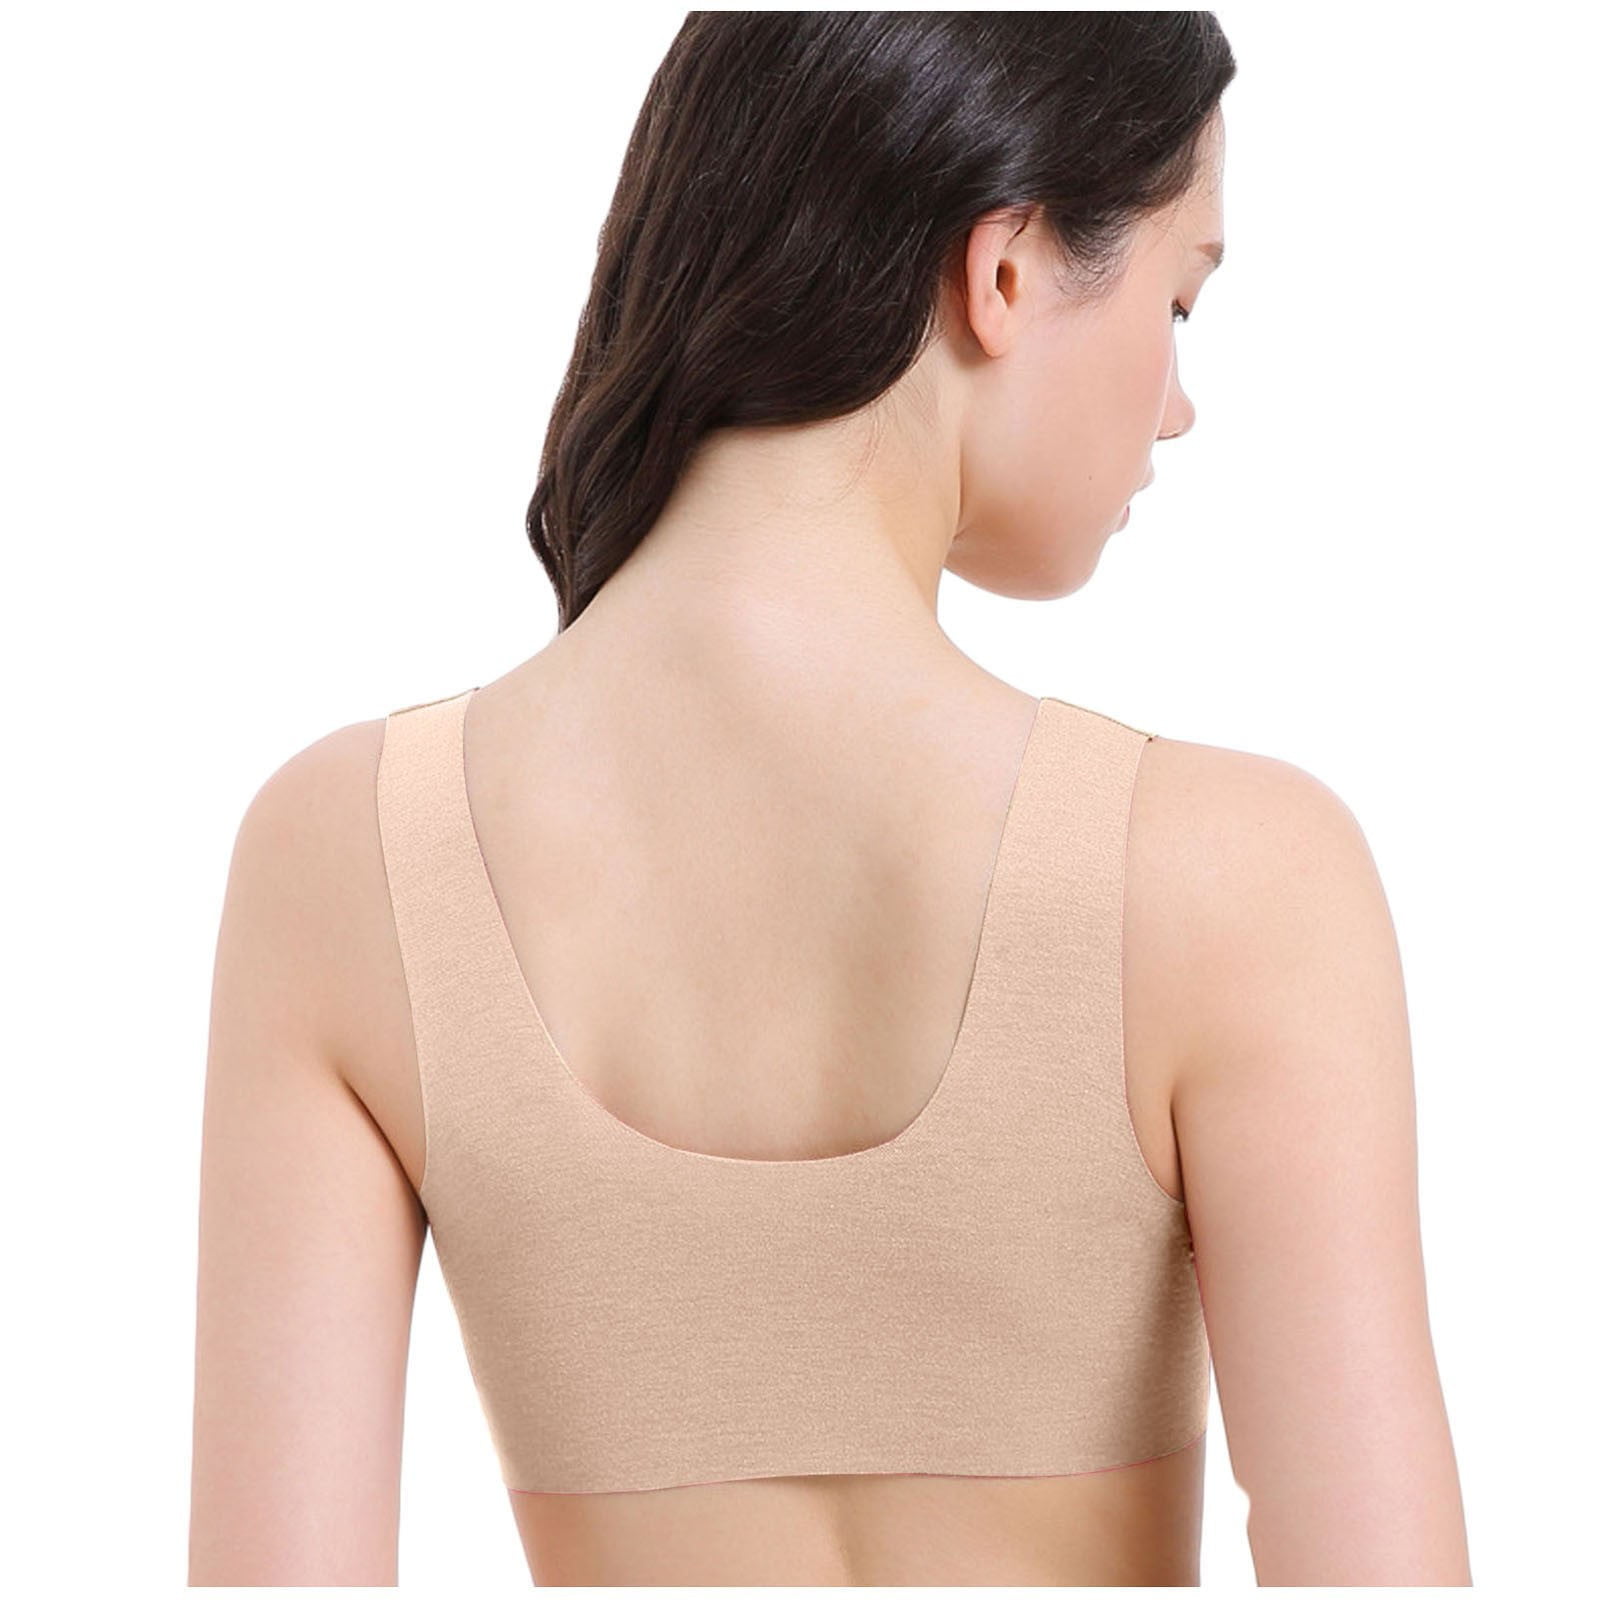 SOOMLON No Wire Bras for Women Fixed Shoulder Strap Daily Comfort Bra  Summer Bra Comfortable Bras Black L 